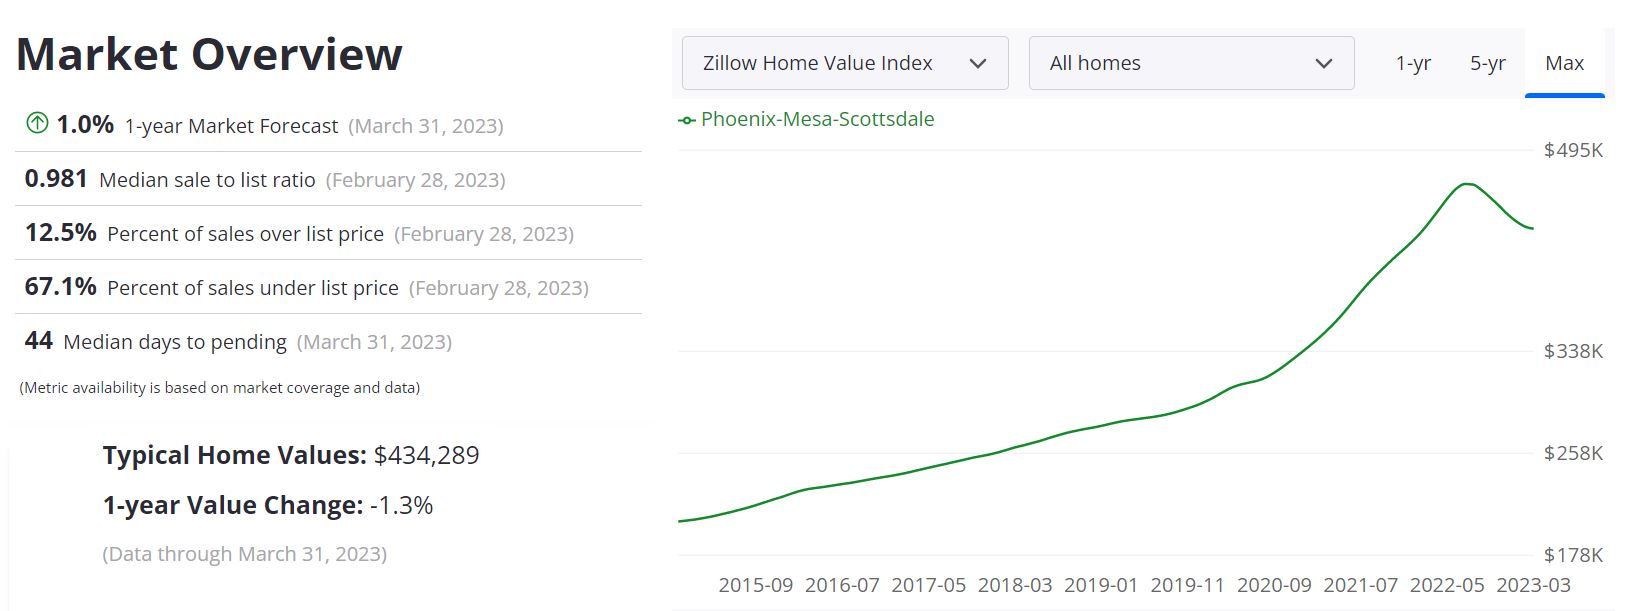 Phoenix Housing Market Forecast